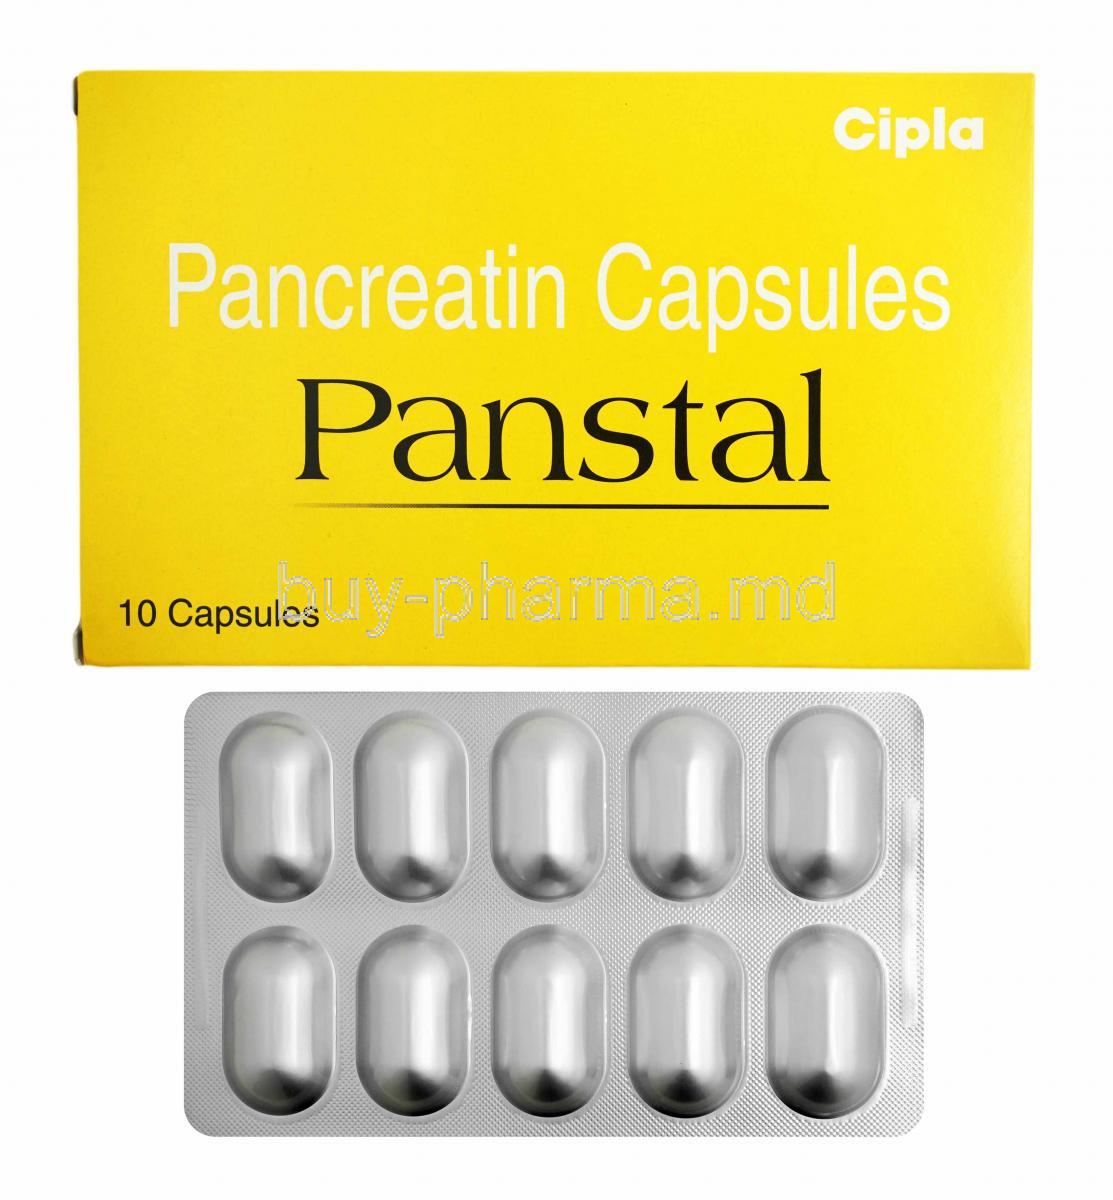 Panstal, Pancreatin, Amilase, Lipase and Protease box and capsules